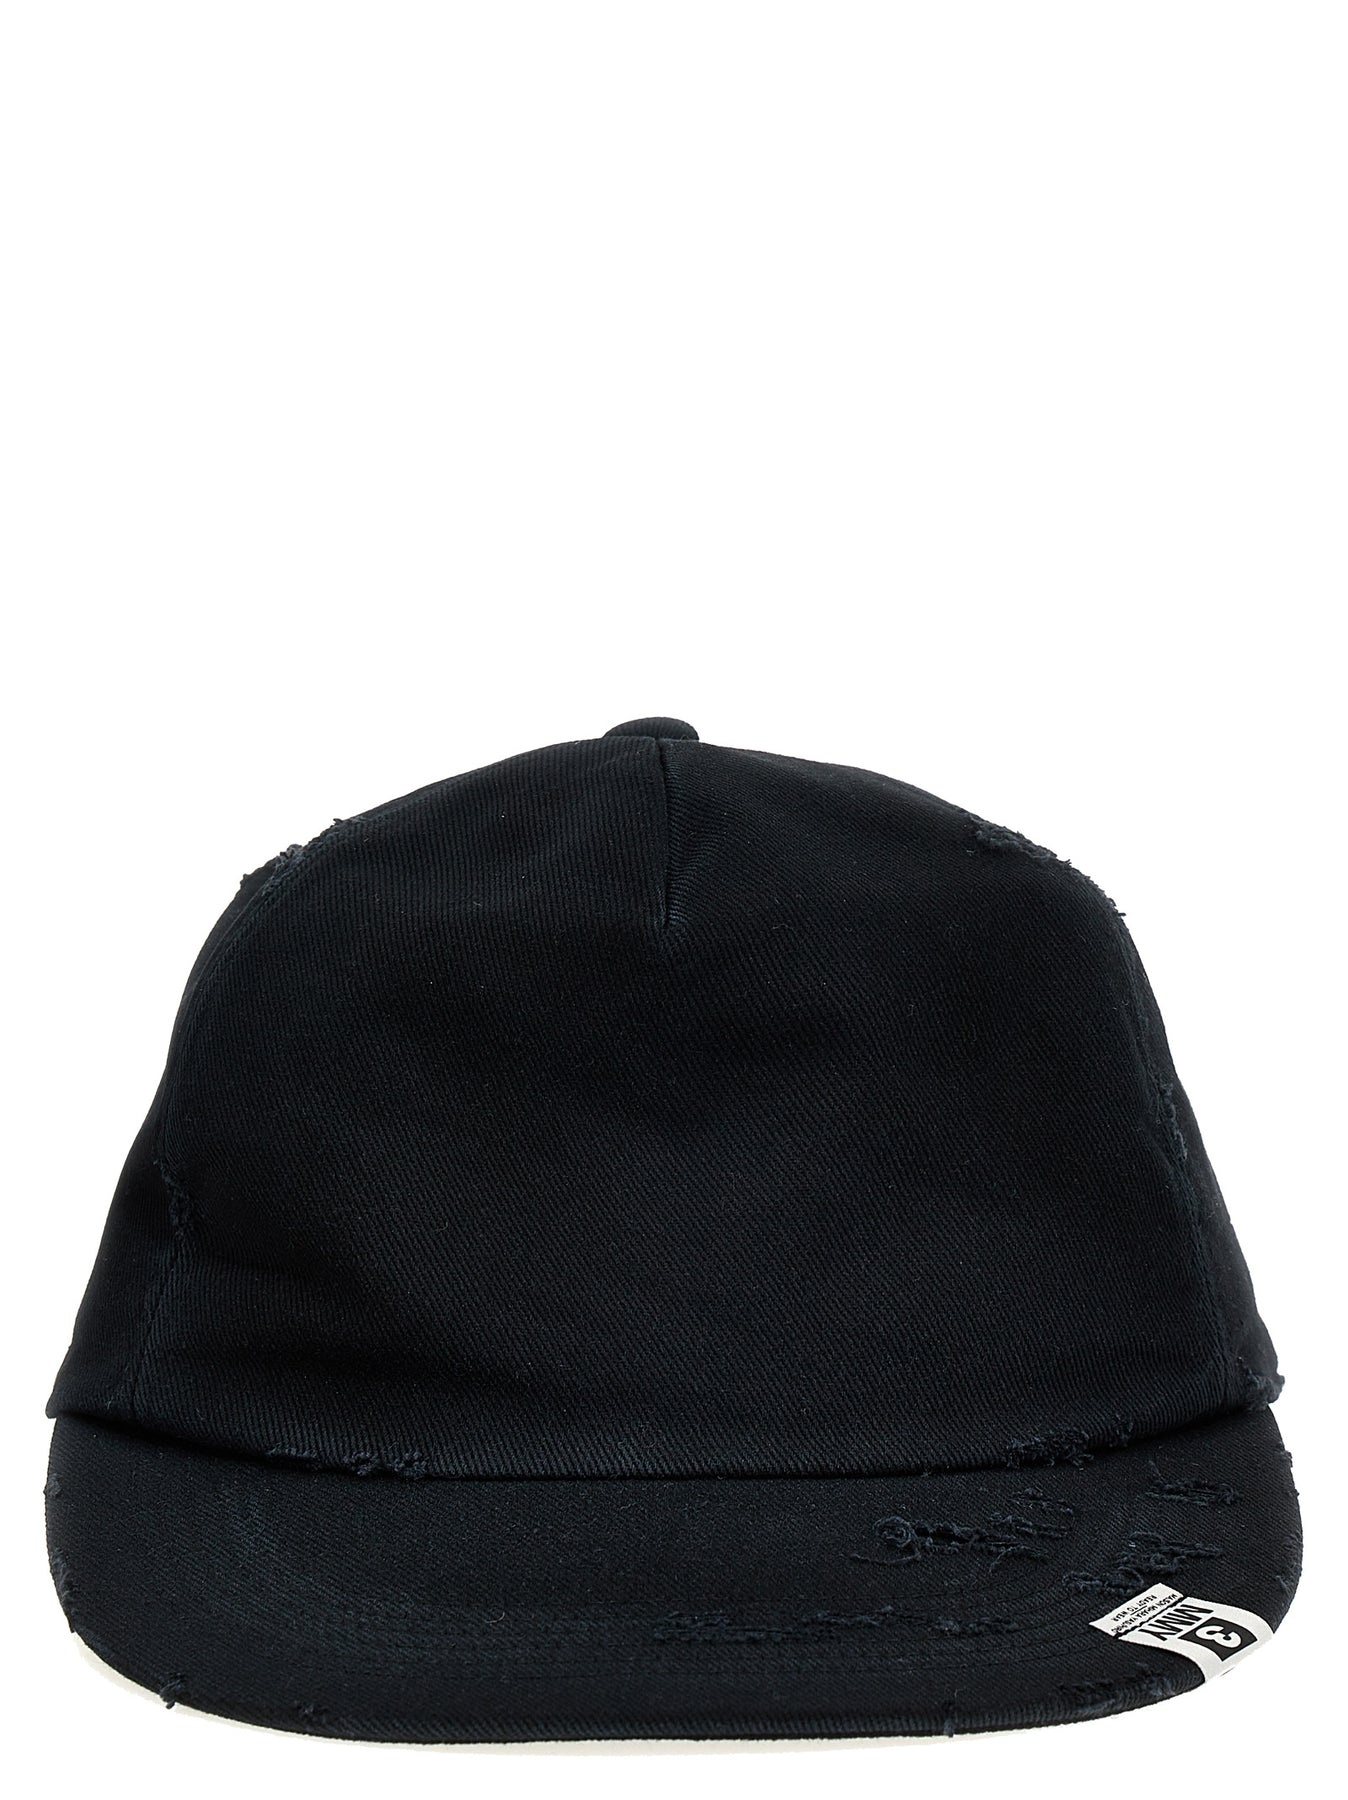 Used Effect Cap Hats Black - 1